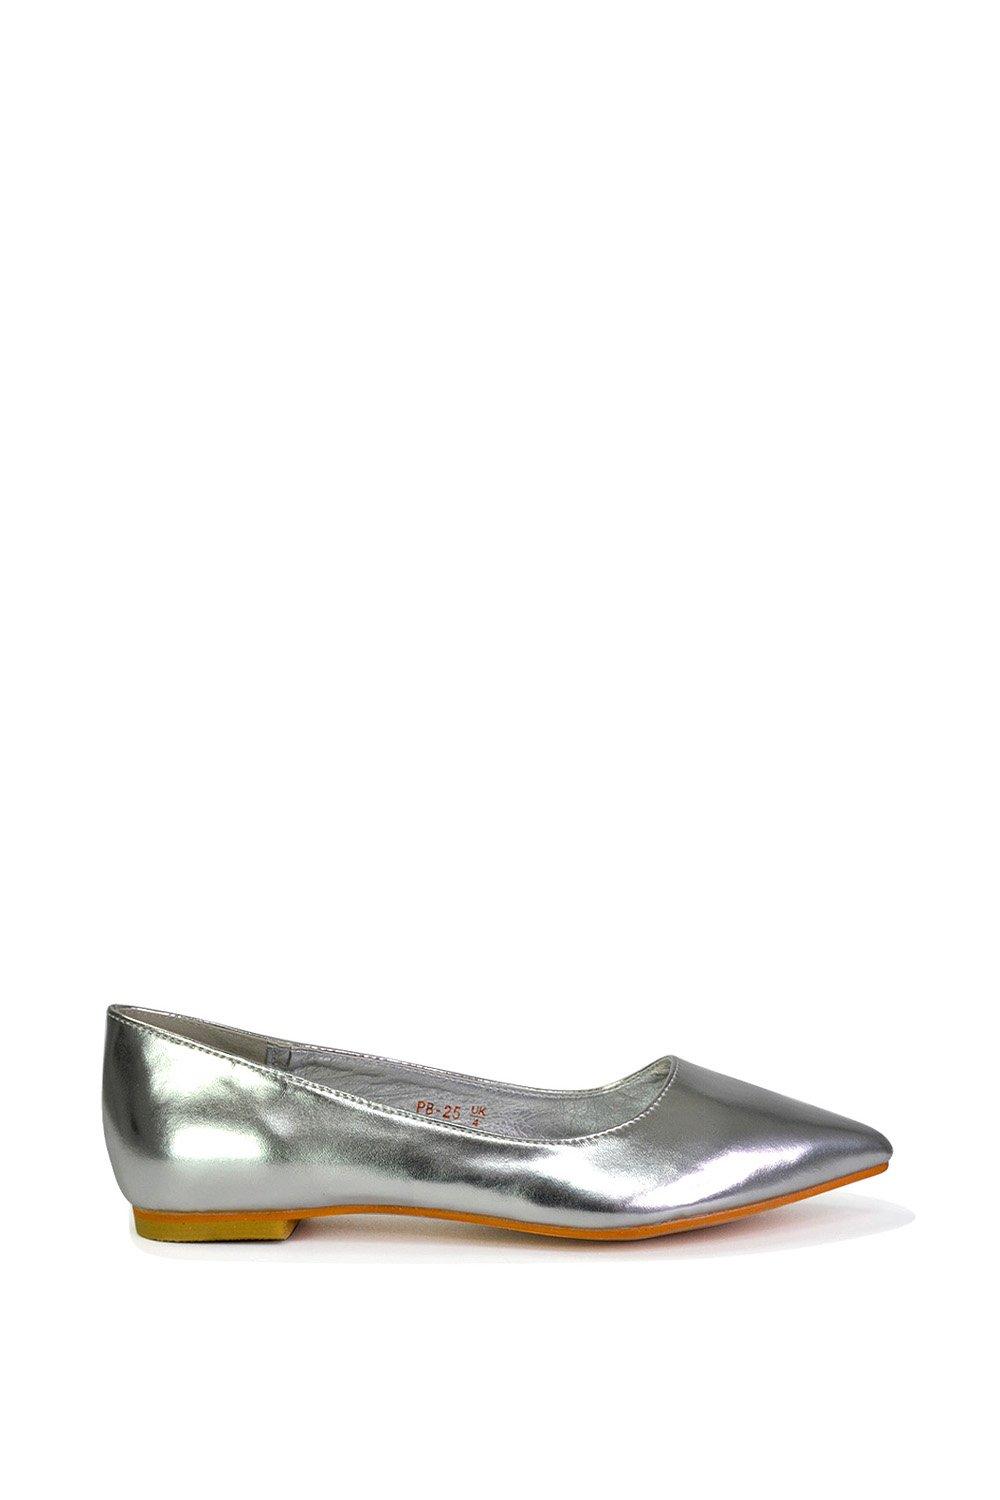 XY London Women's 'Bubbles' Pointed Toe Slip on Flat Ballerina Pump Shoes|Size: 8|metallic silver